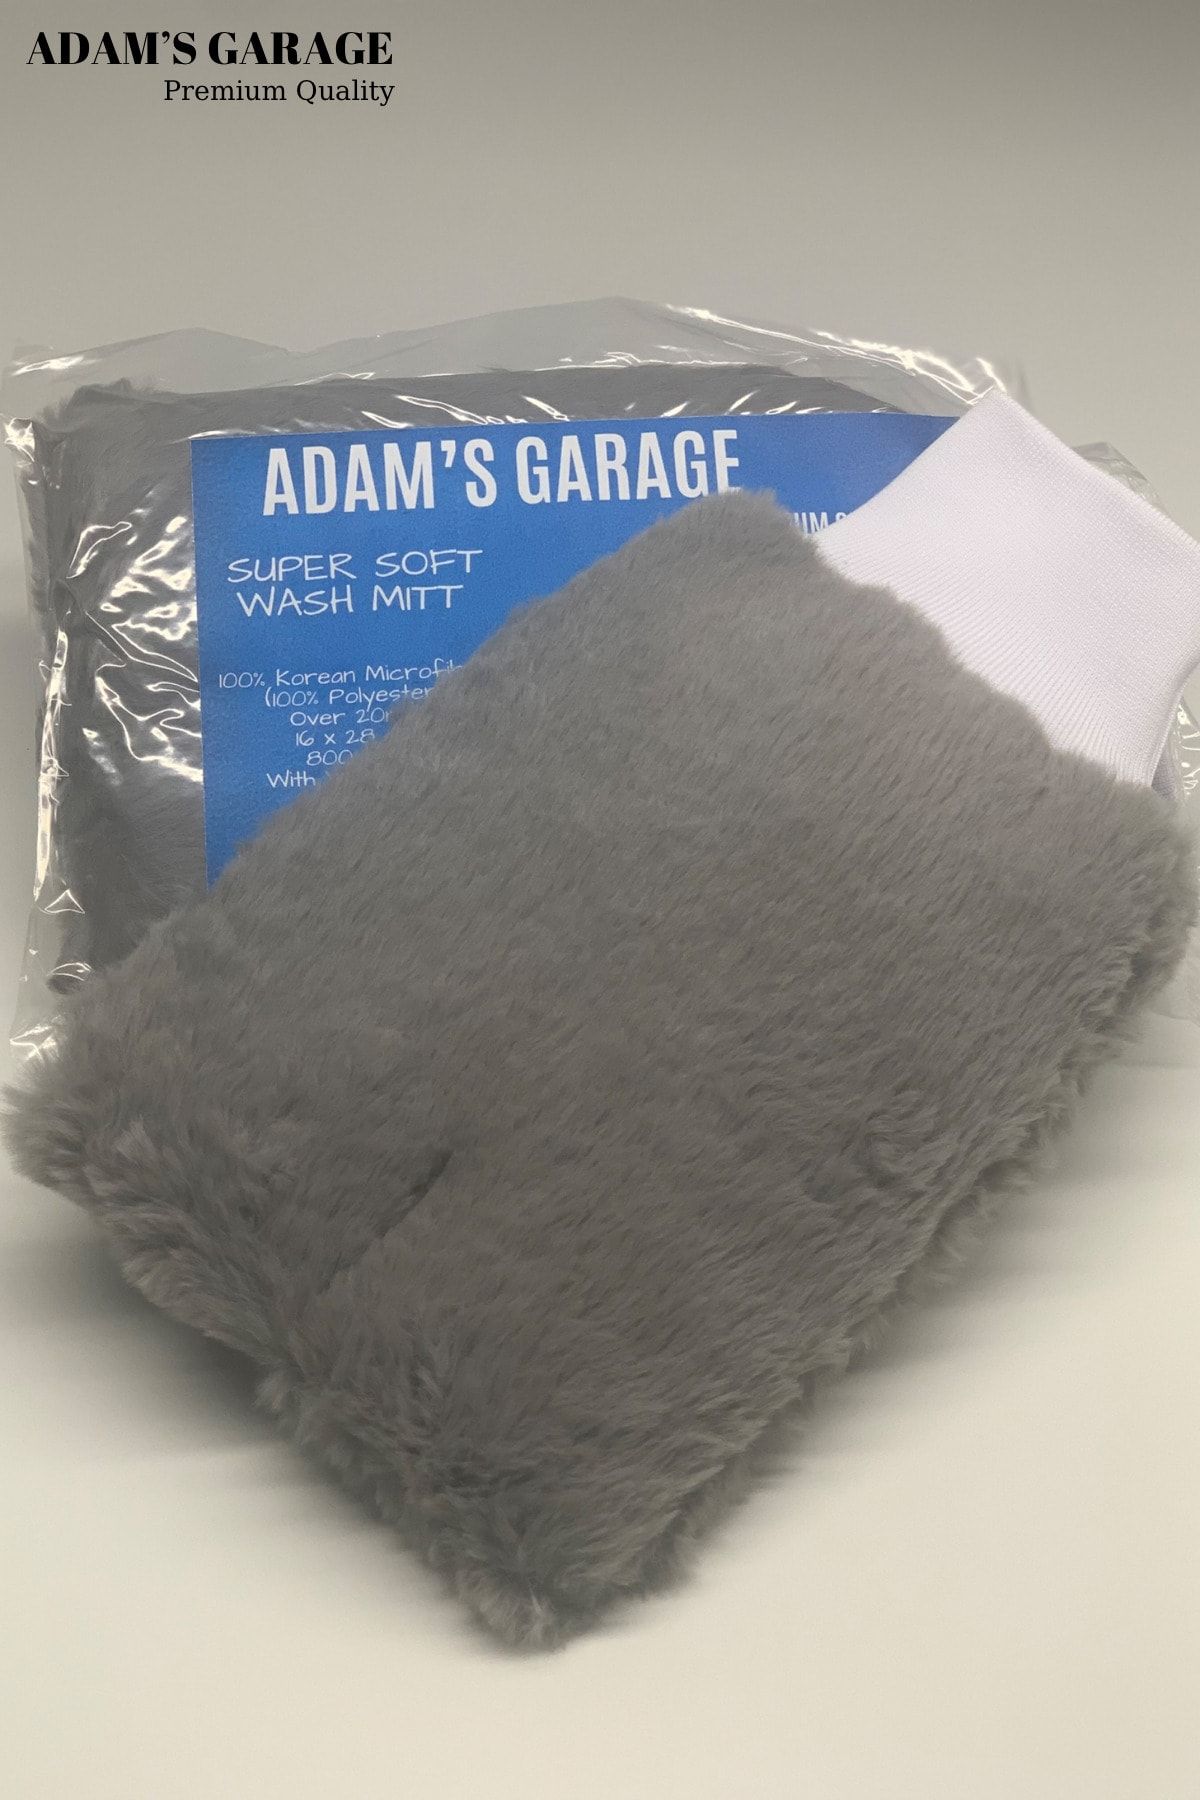 Adams Garage Süper Soft Wash Mitt Araç Yıkama Eldiveni 800 Gsm 16 X 28 Made In Korea